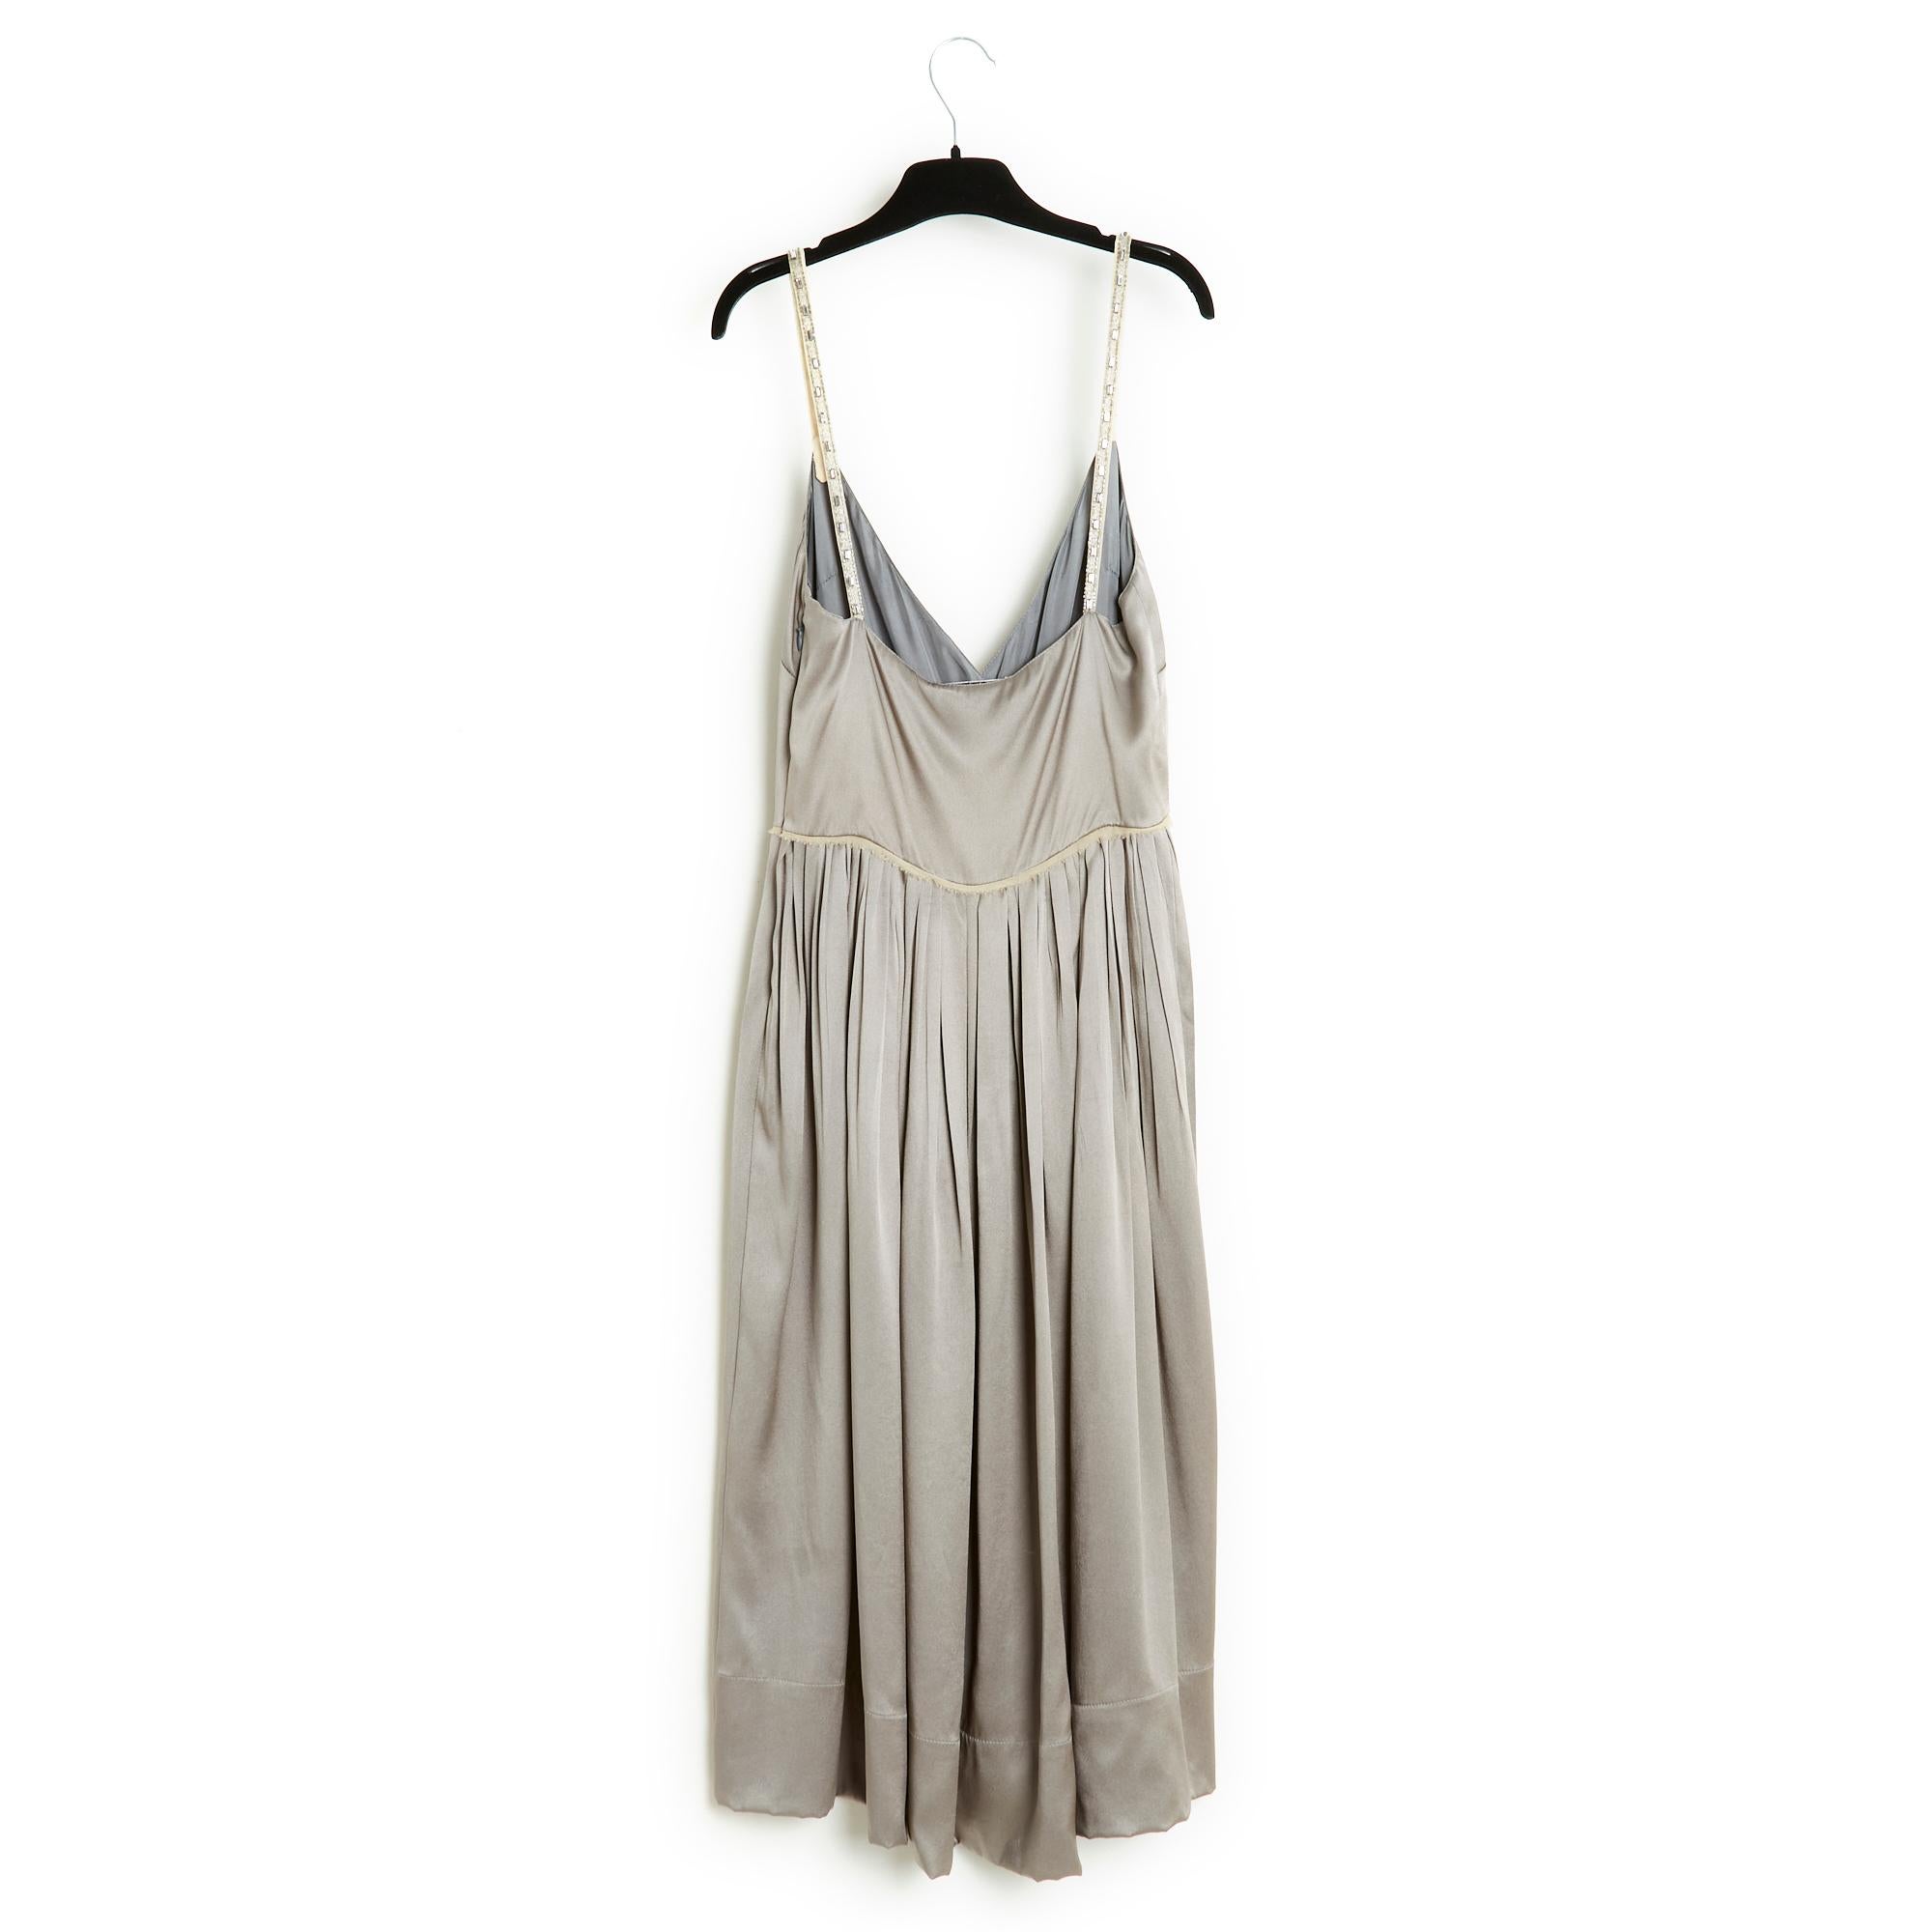 2005 Chloe by Phoebe Philo Light Gray Satin Dress FR34 For Sale 2